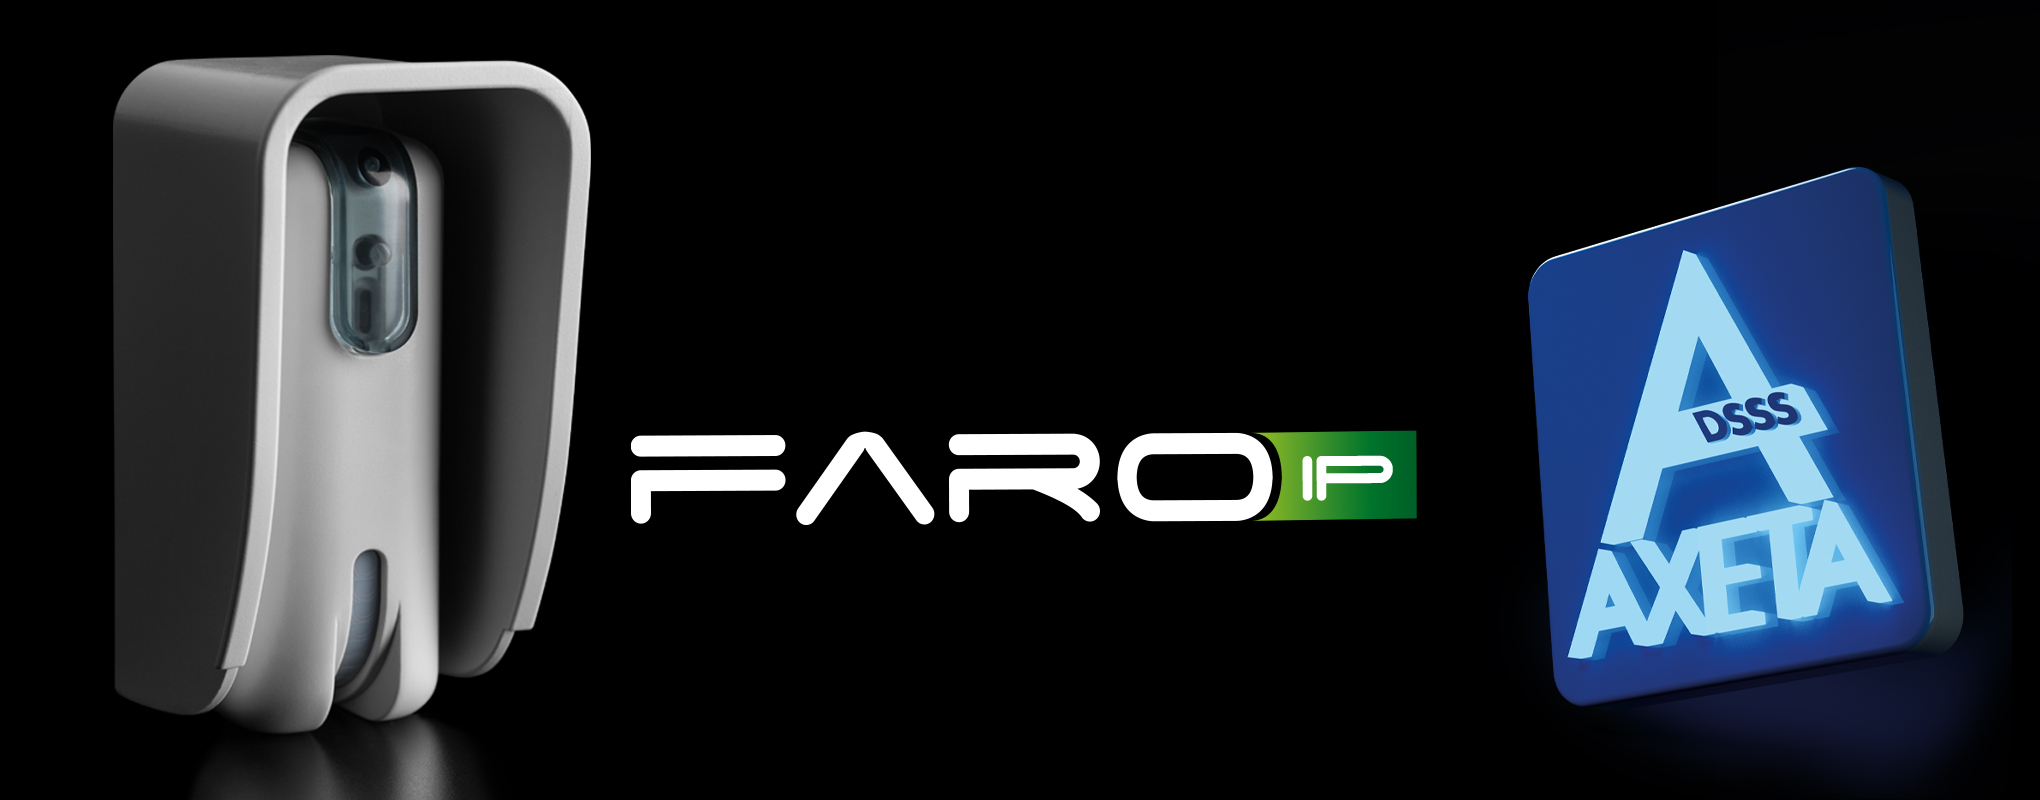 FARO IP AXETA | WIRELESS BATTERY-POWERED OUTDOOR DUAL TECHNOLOGY DETECTOR